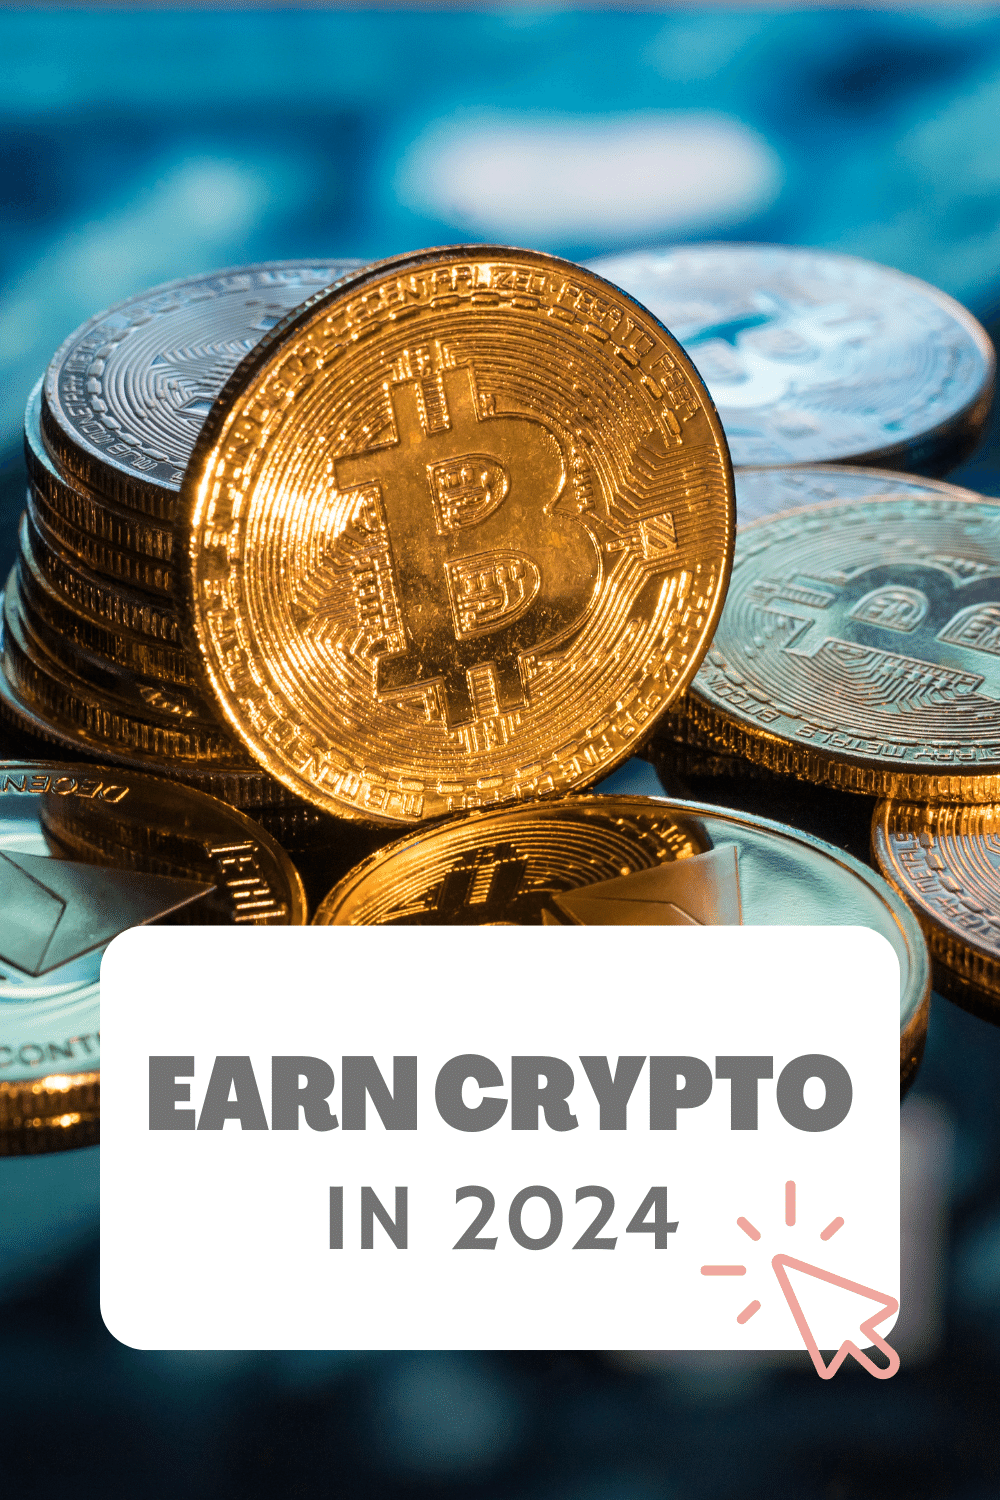 Earn Crypto in 2024